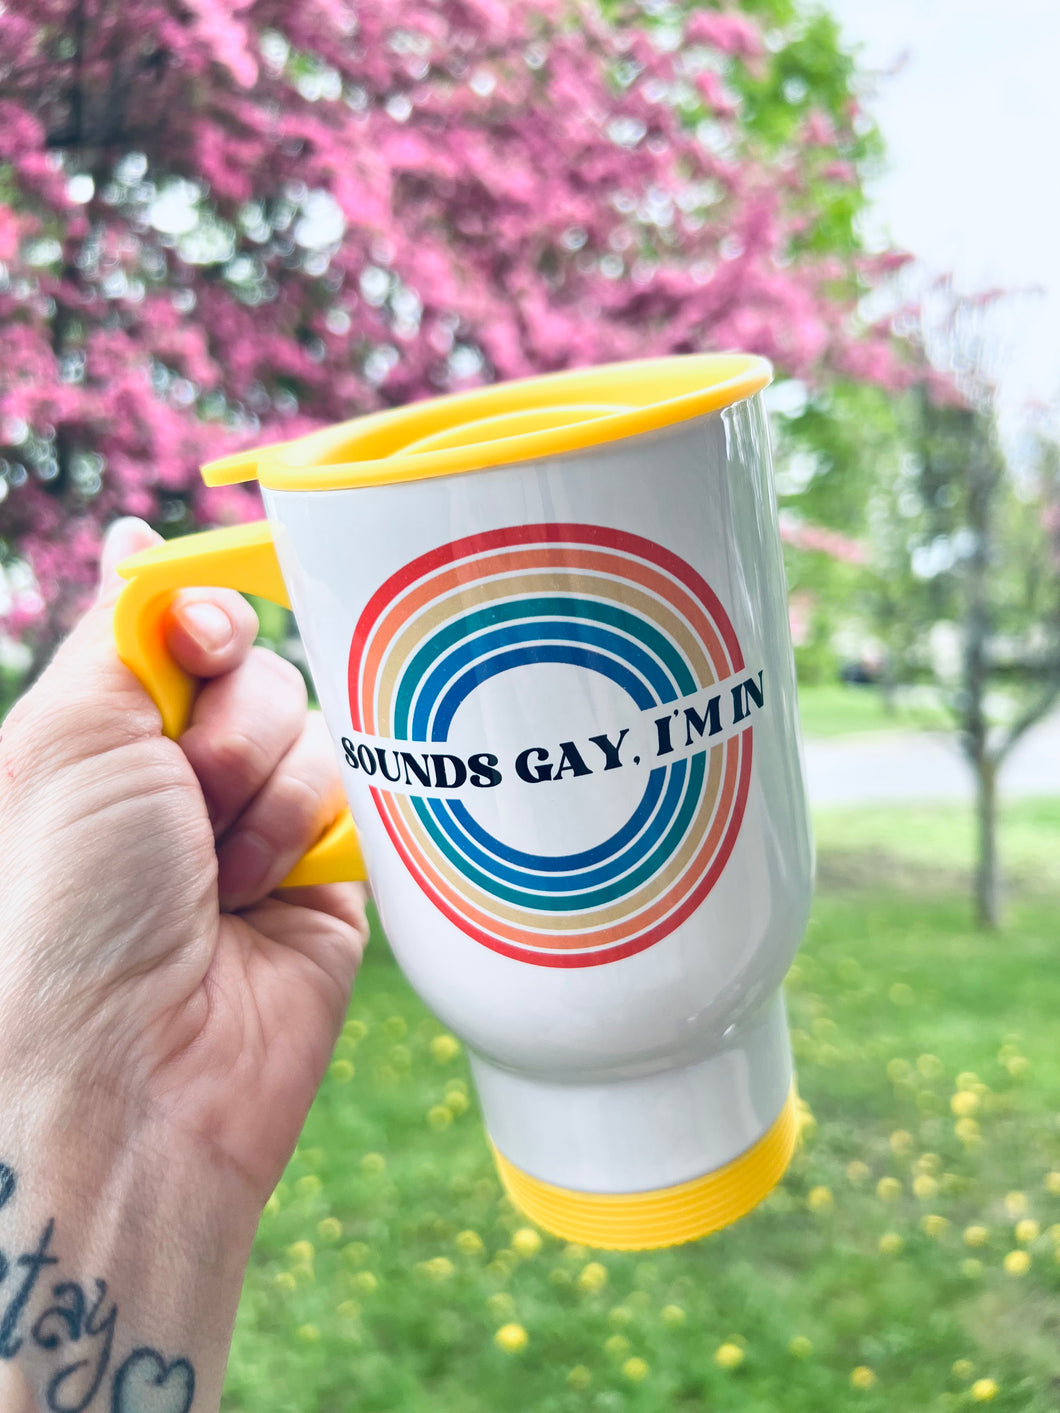 Sounds gay, I’m In Travel Mug